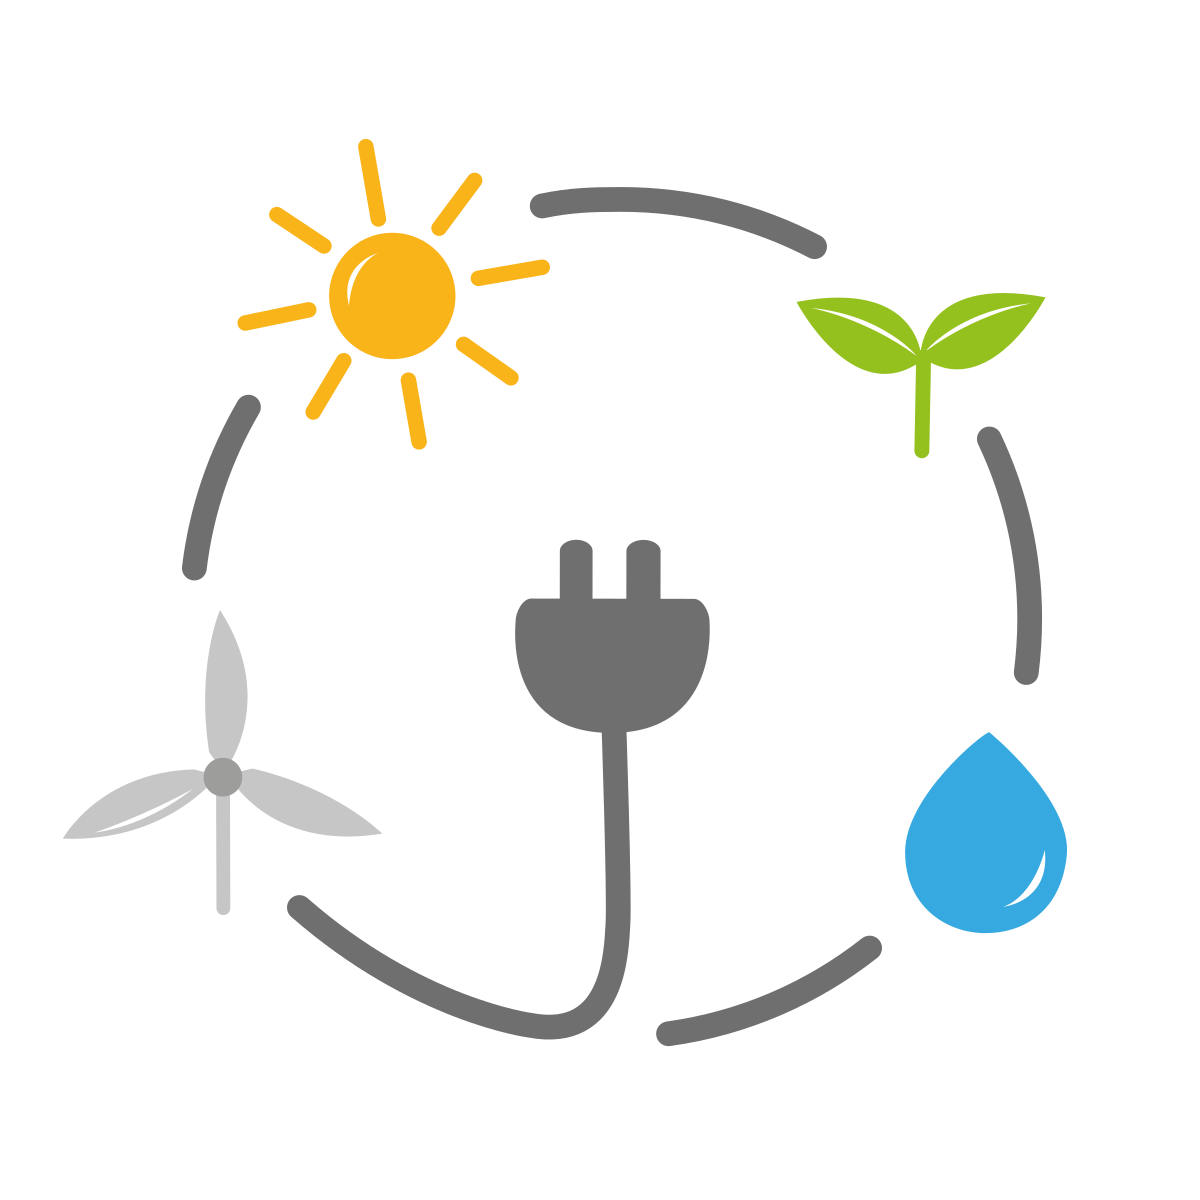 Energía renovable - Wikipedia, la enciclopedia libre